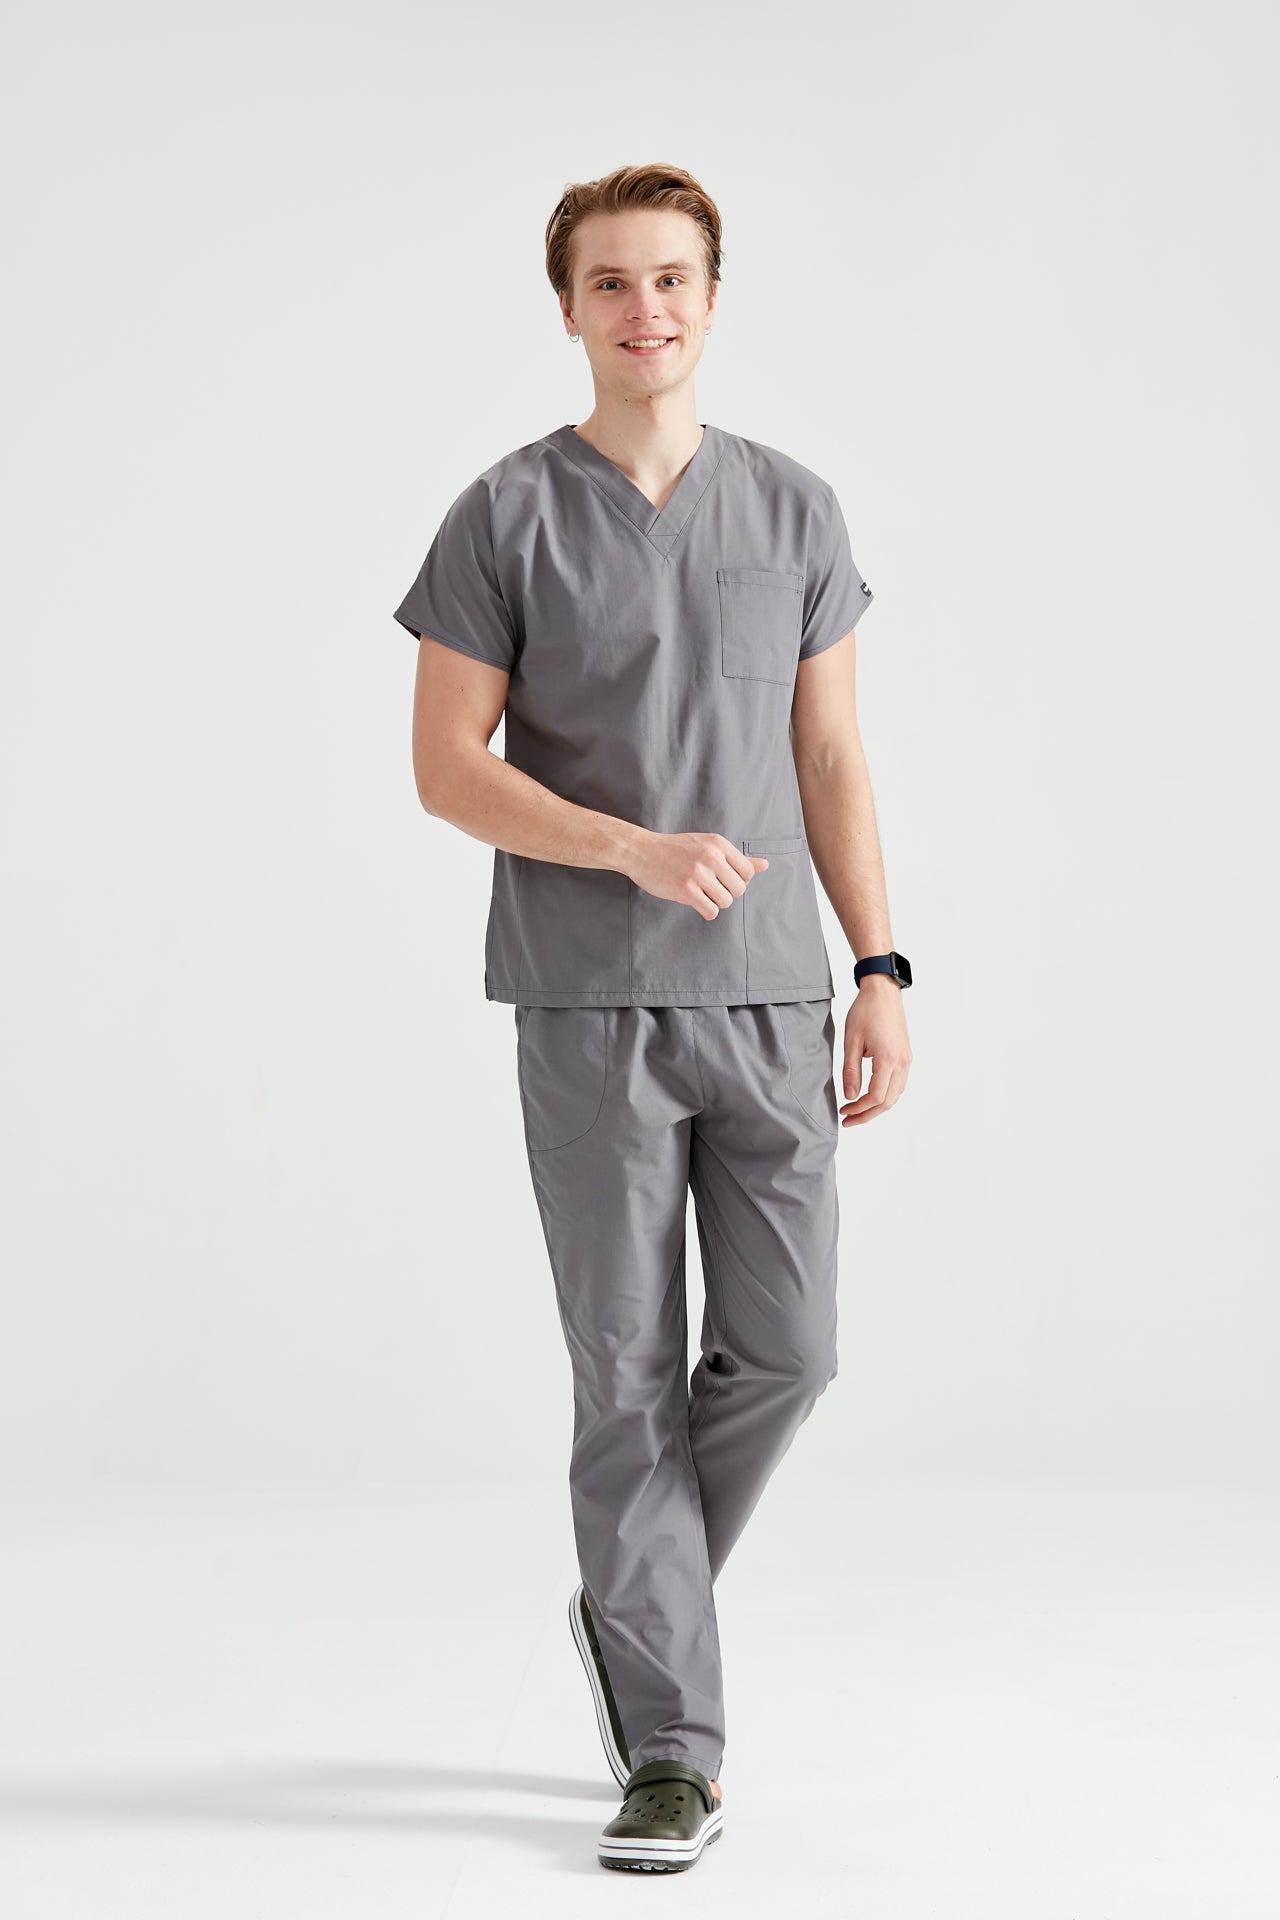 Asistent medical imbracat in costum medical pentru barbati, Grey, vedere din picioare